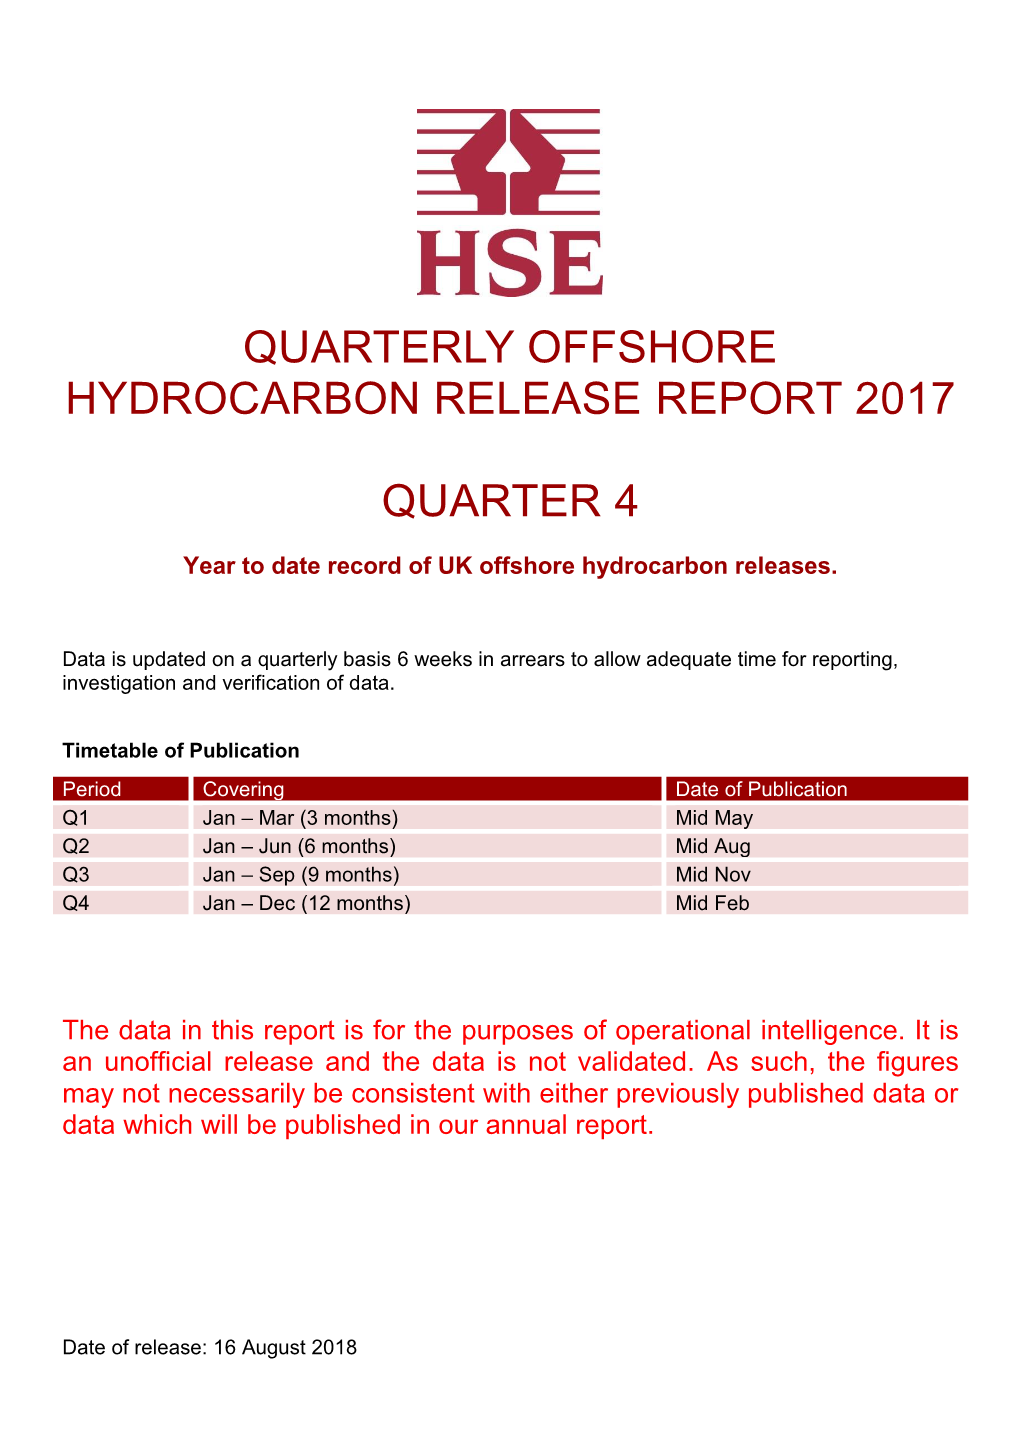 Quarterly Offshore Hydrocarbon Release Report 2017 Quarter 4